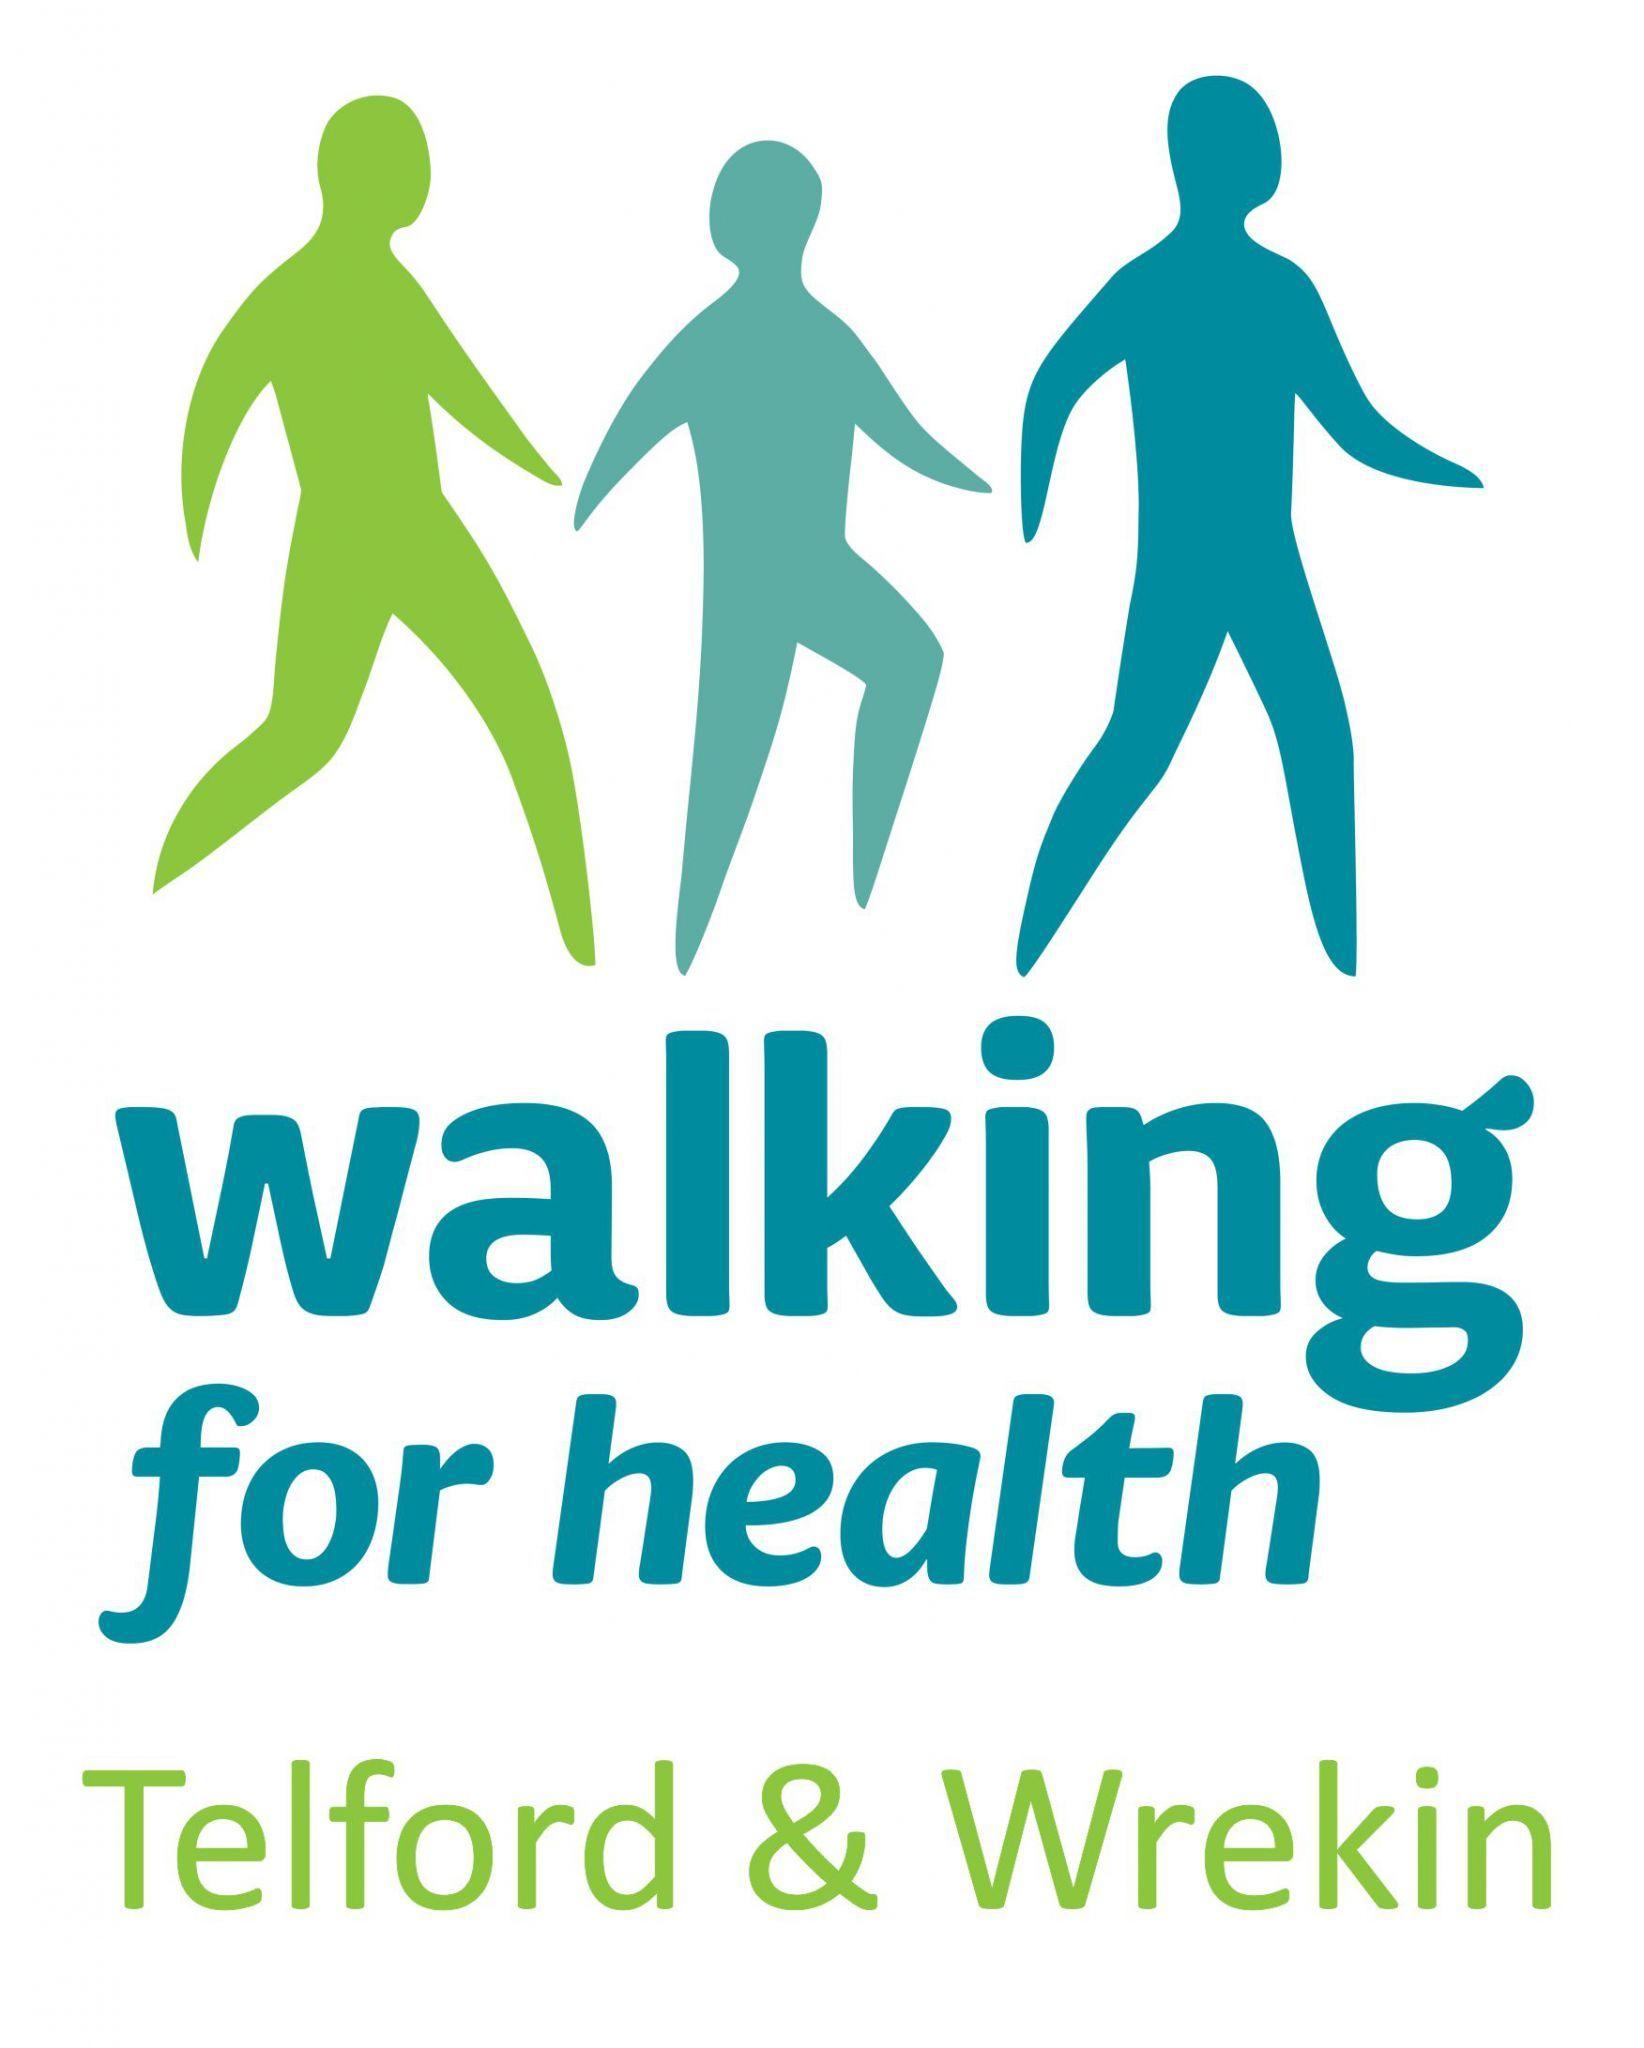 Walking Logo - logo 1 For Health & Wrekin